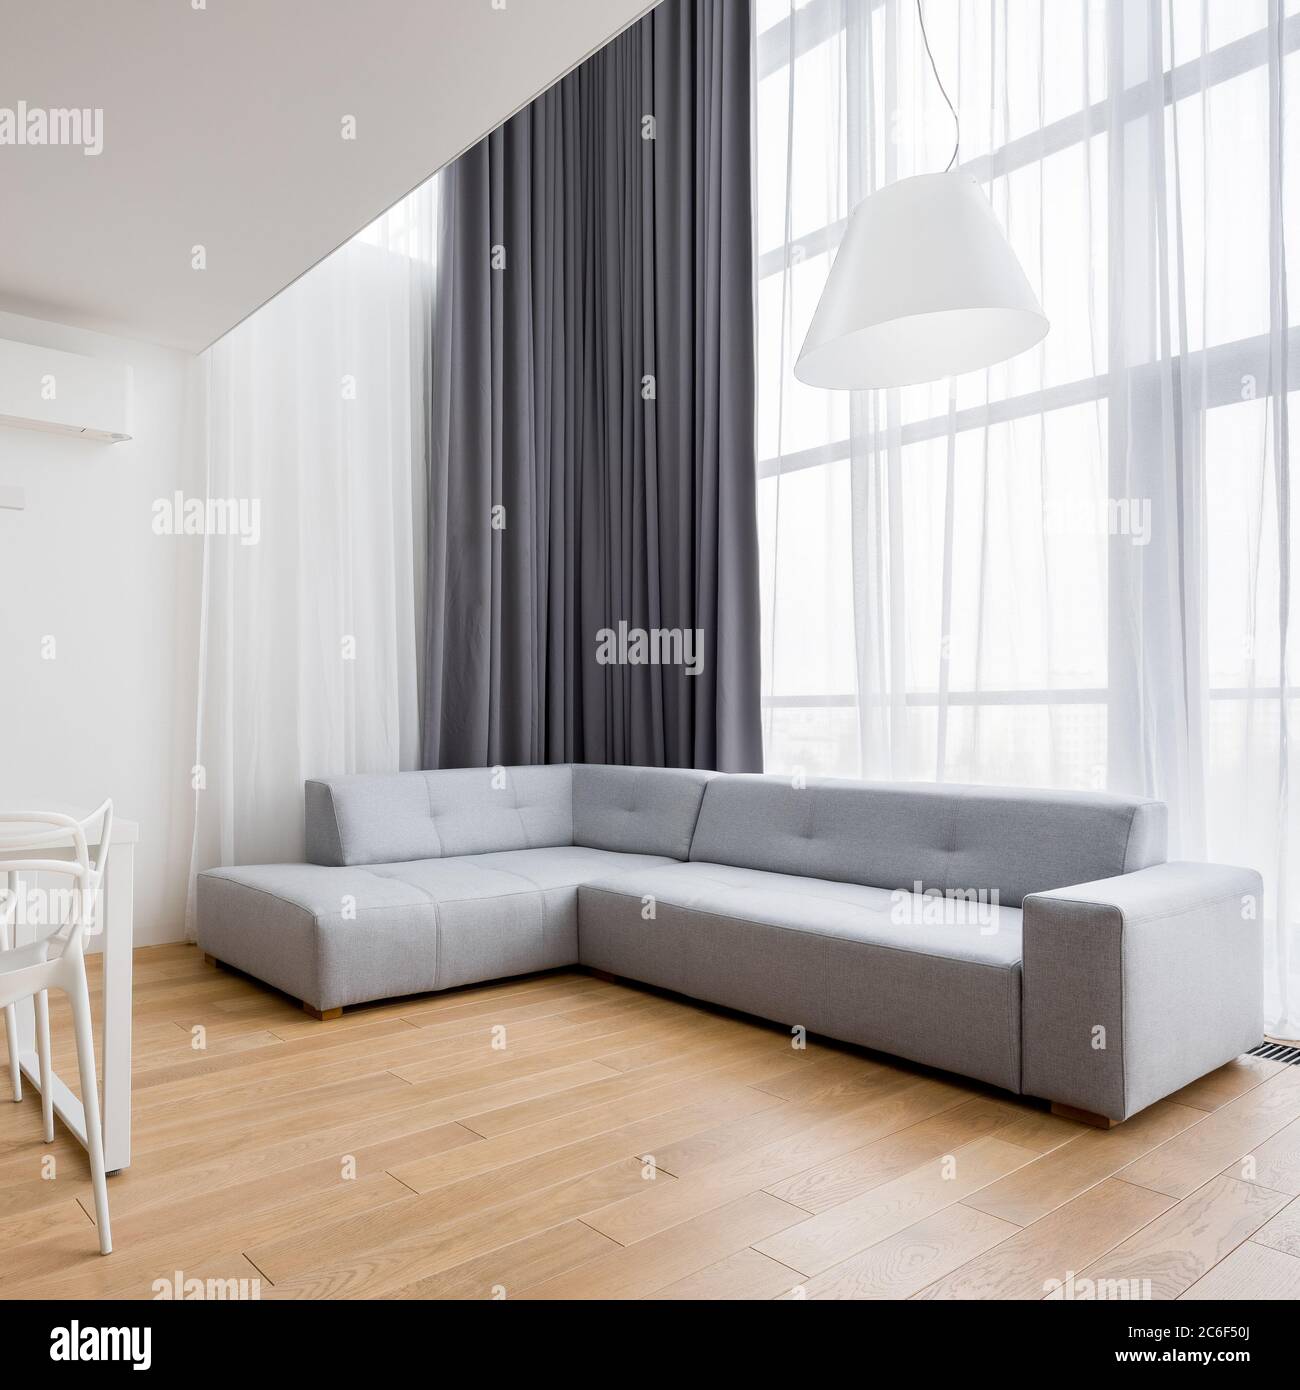 Home interior with corner sofa and new design white chairs Stock Photo